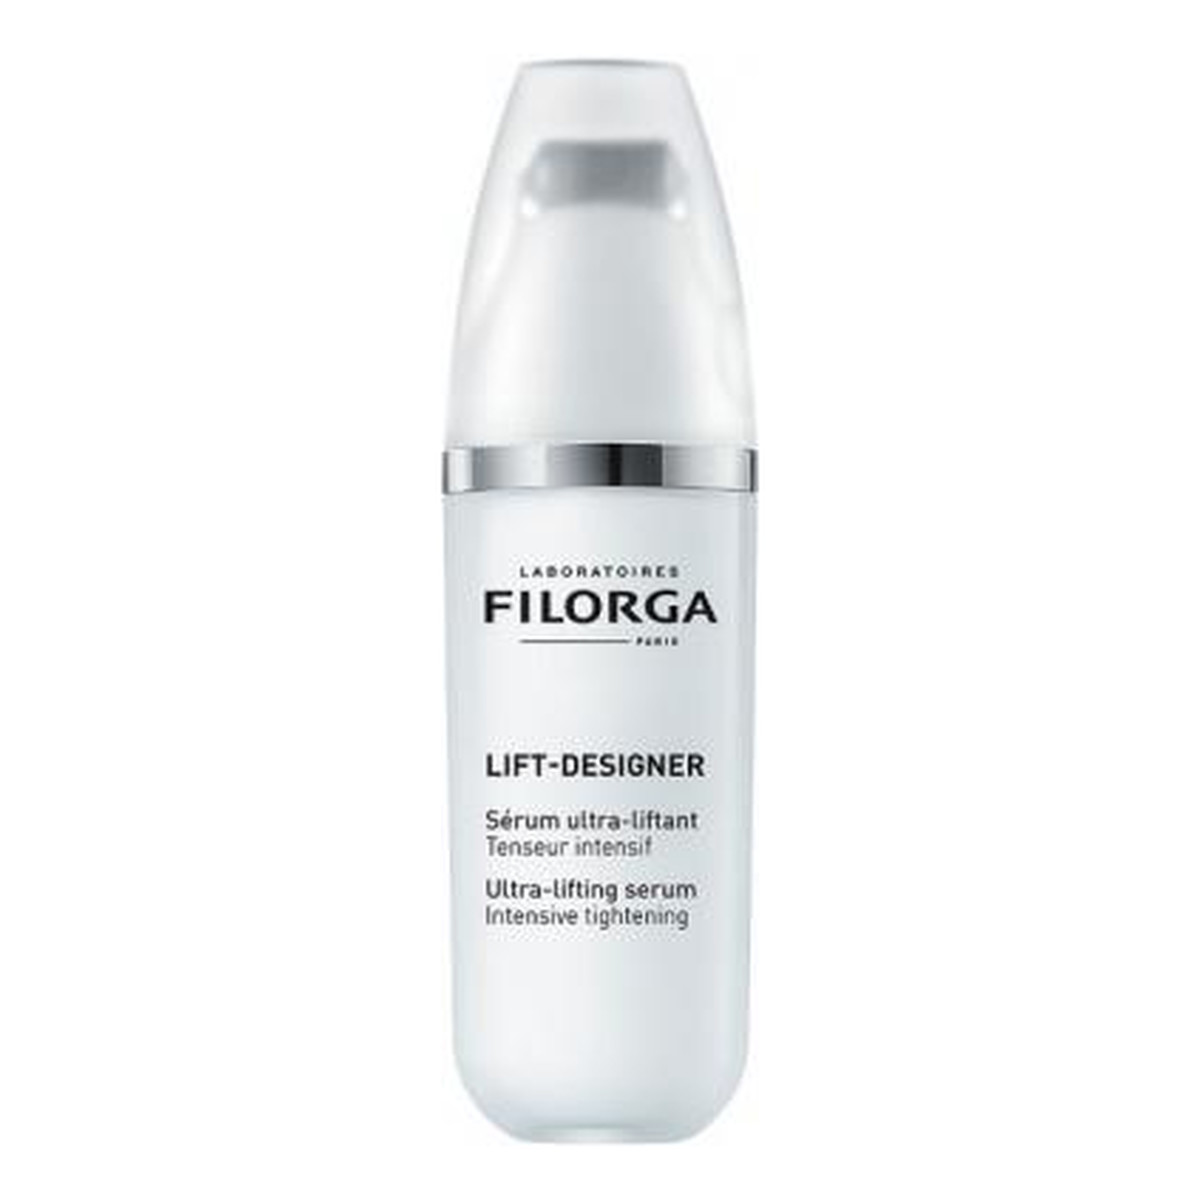 Filorga Lift-designer ultra-lifting serum intensywnie liftingujące serum do twarzy 30ml